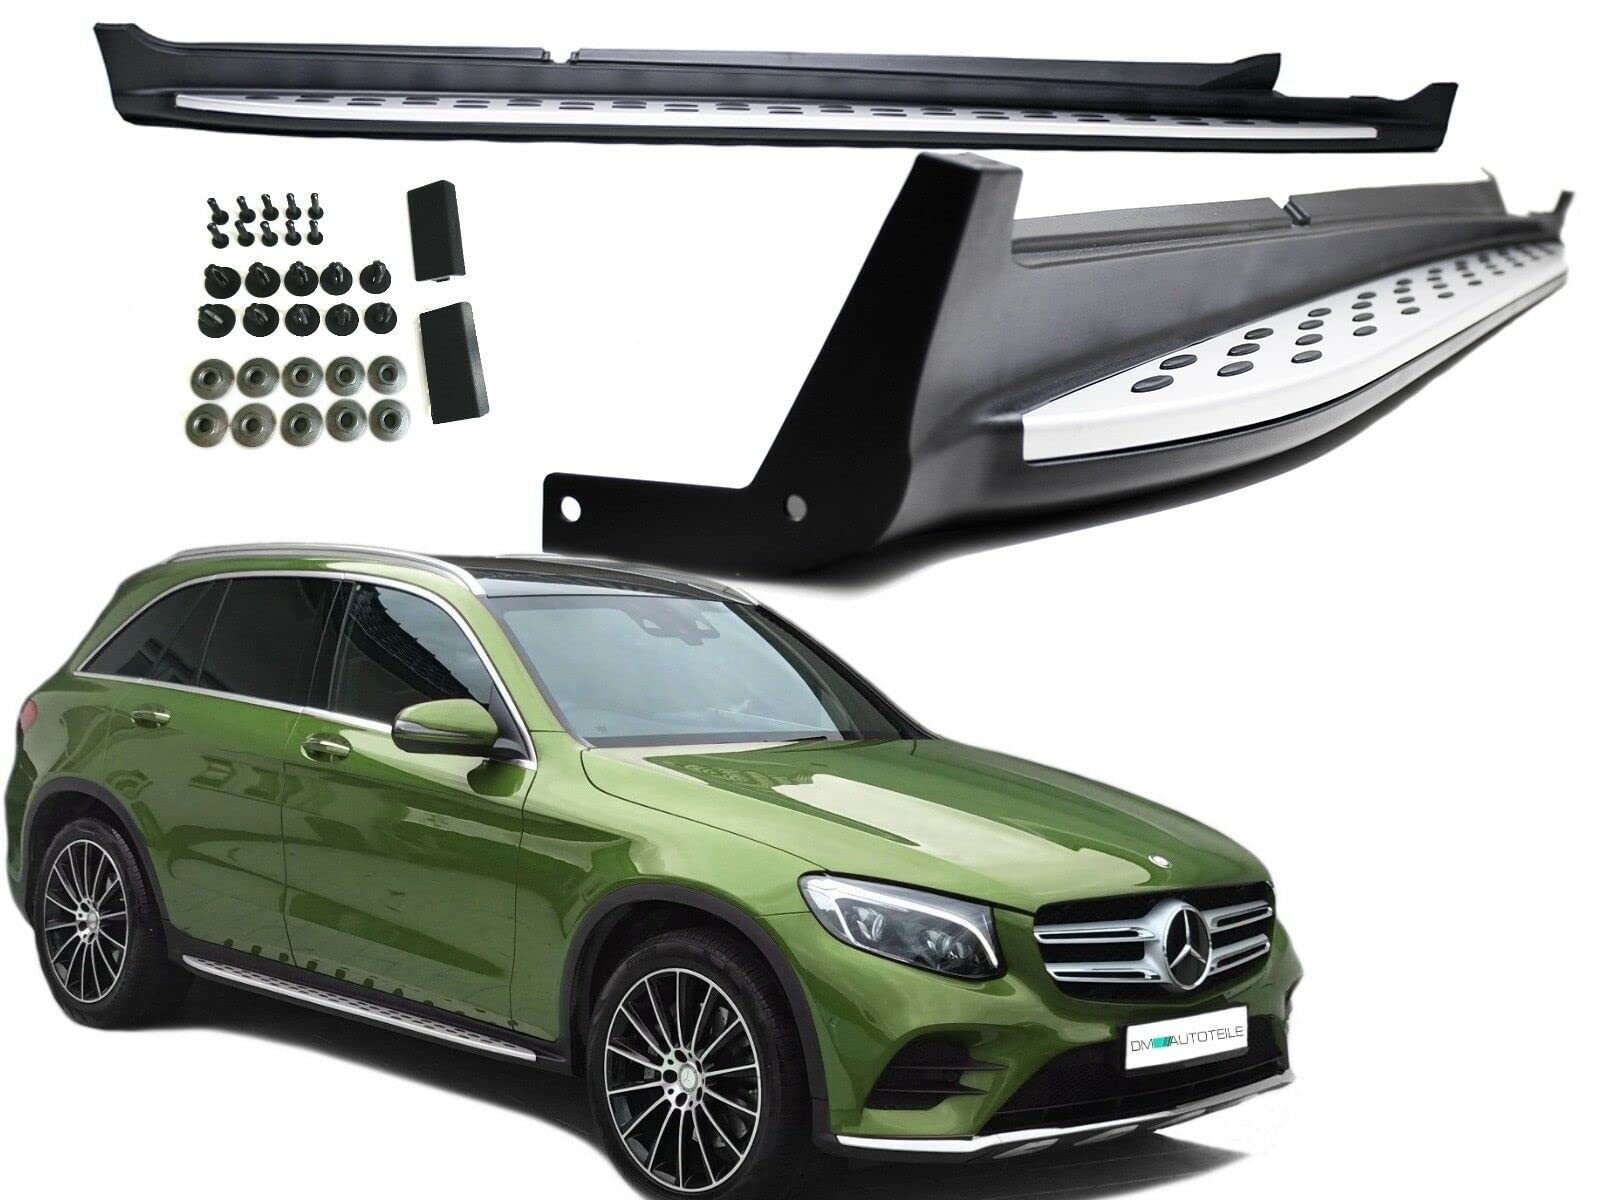 DM AutoteileSatz Trittbretter Alu + Anbaumaterial kompatibel für Mercedes GLC X253 + Coupe C253 2015-2019 von DM Autoteile